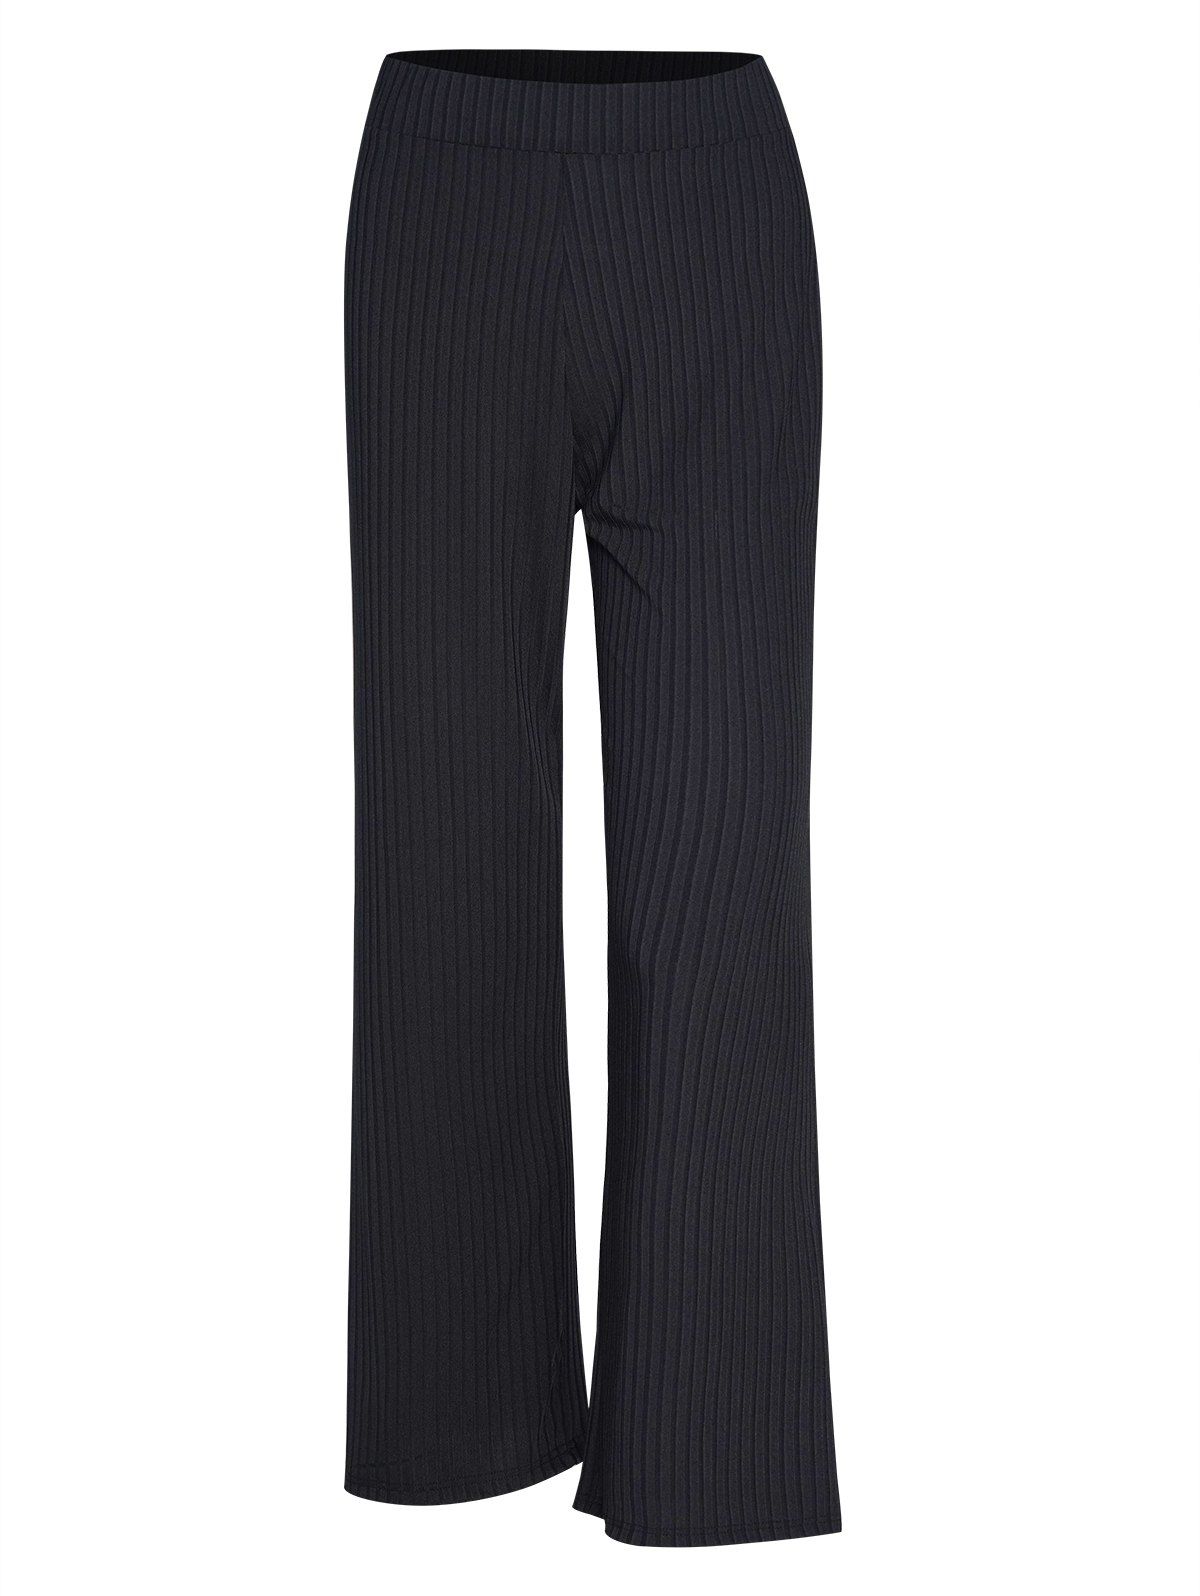 Solid Color Textured Wide Leg Pants Long Elastic High Waist Pants - BLACK L